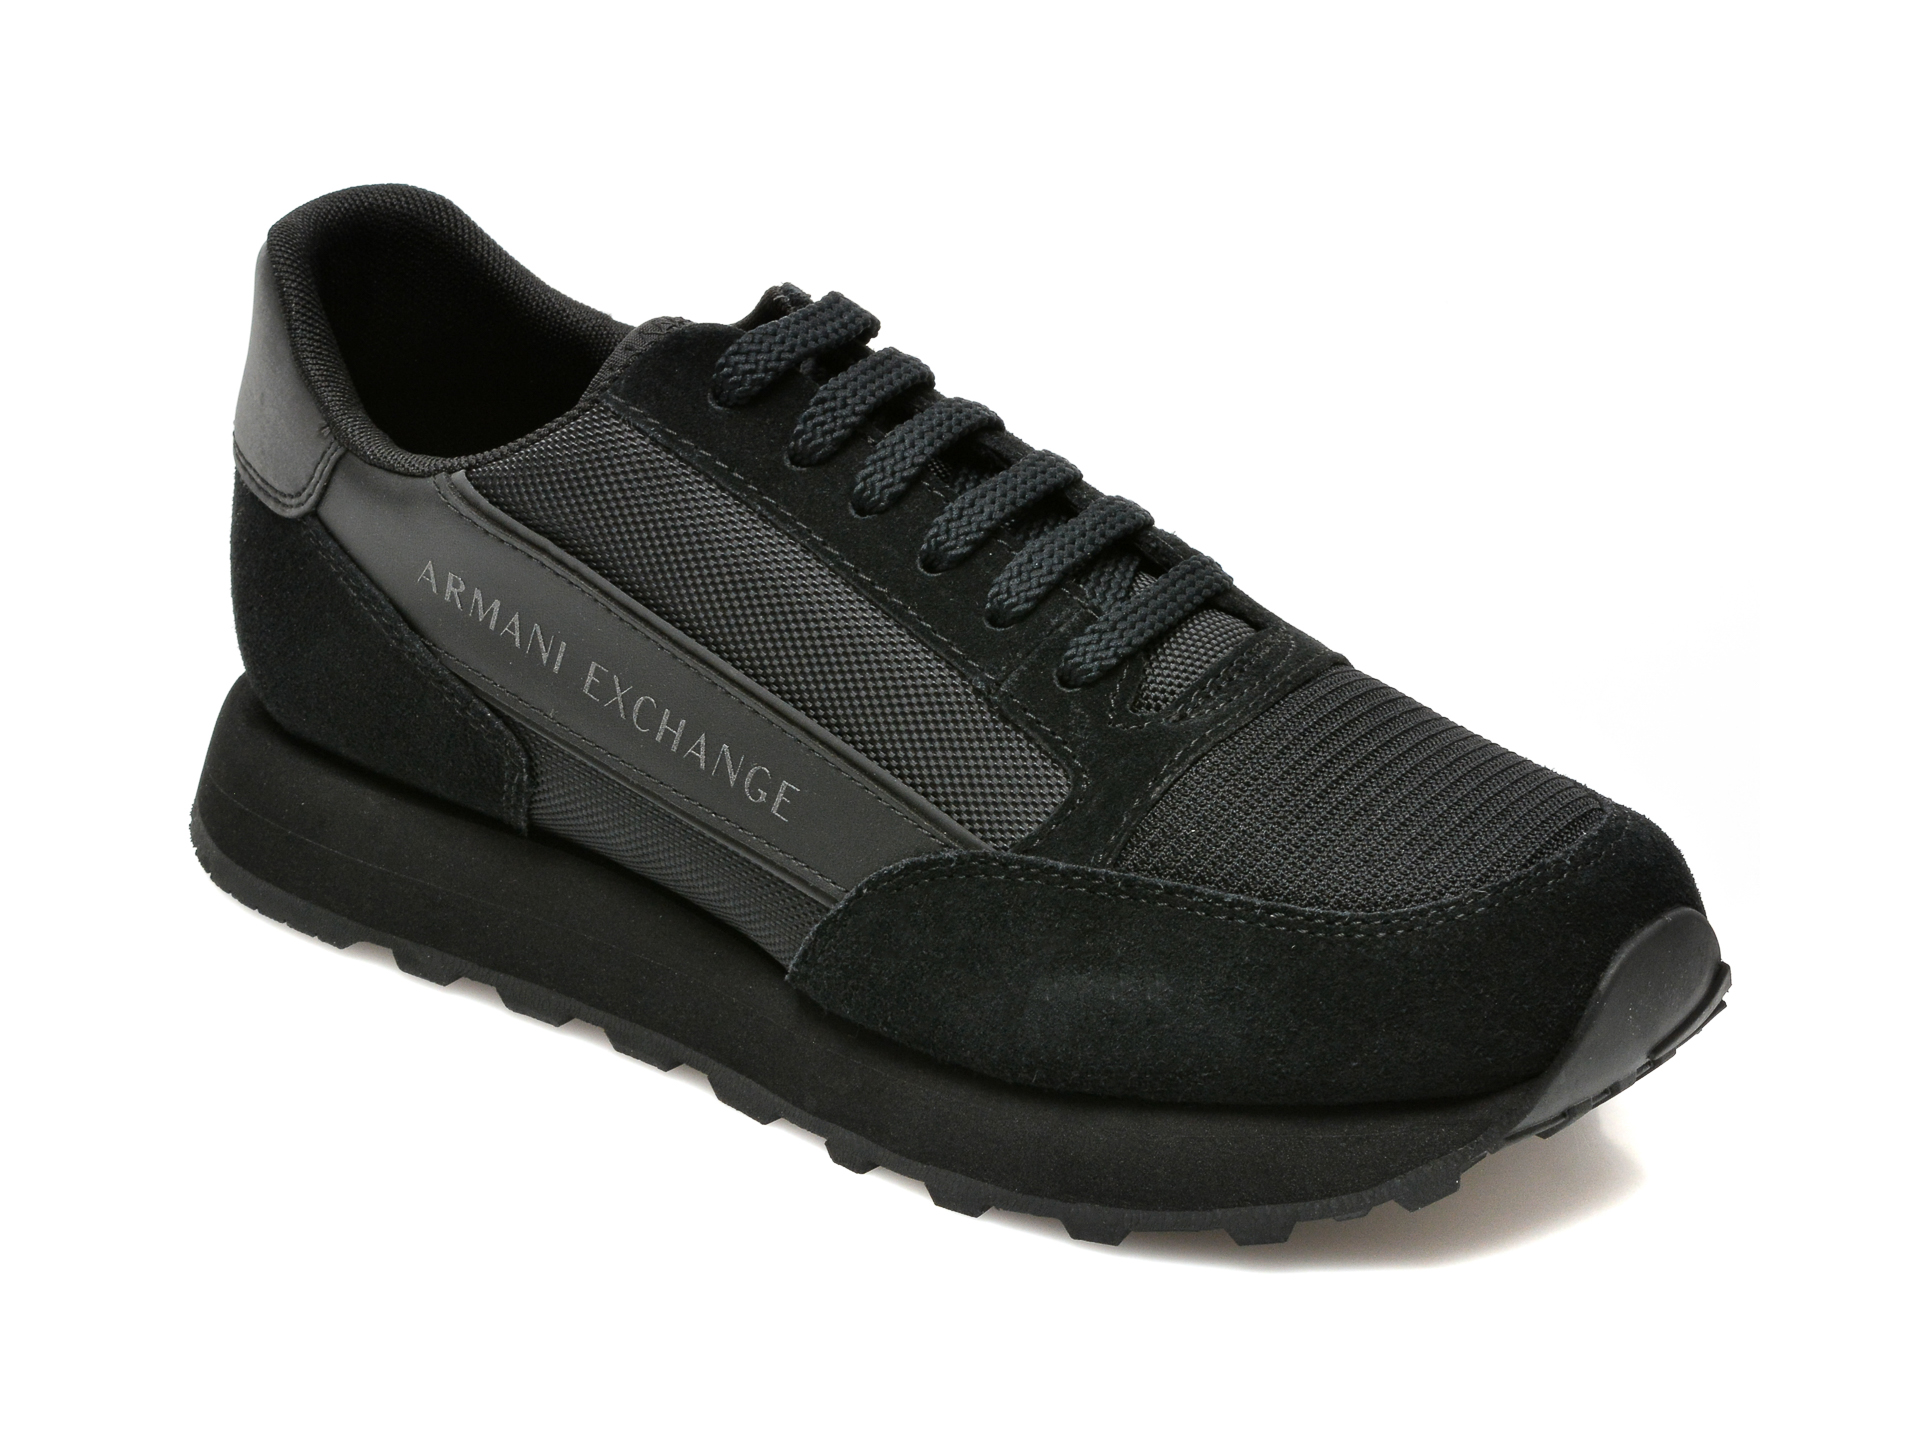 Pantofi sport ARMANI EXCHANGE negri, XUX083, din material textil si piele naturala Armani Exchange imagine 2022 13clothing.ro